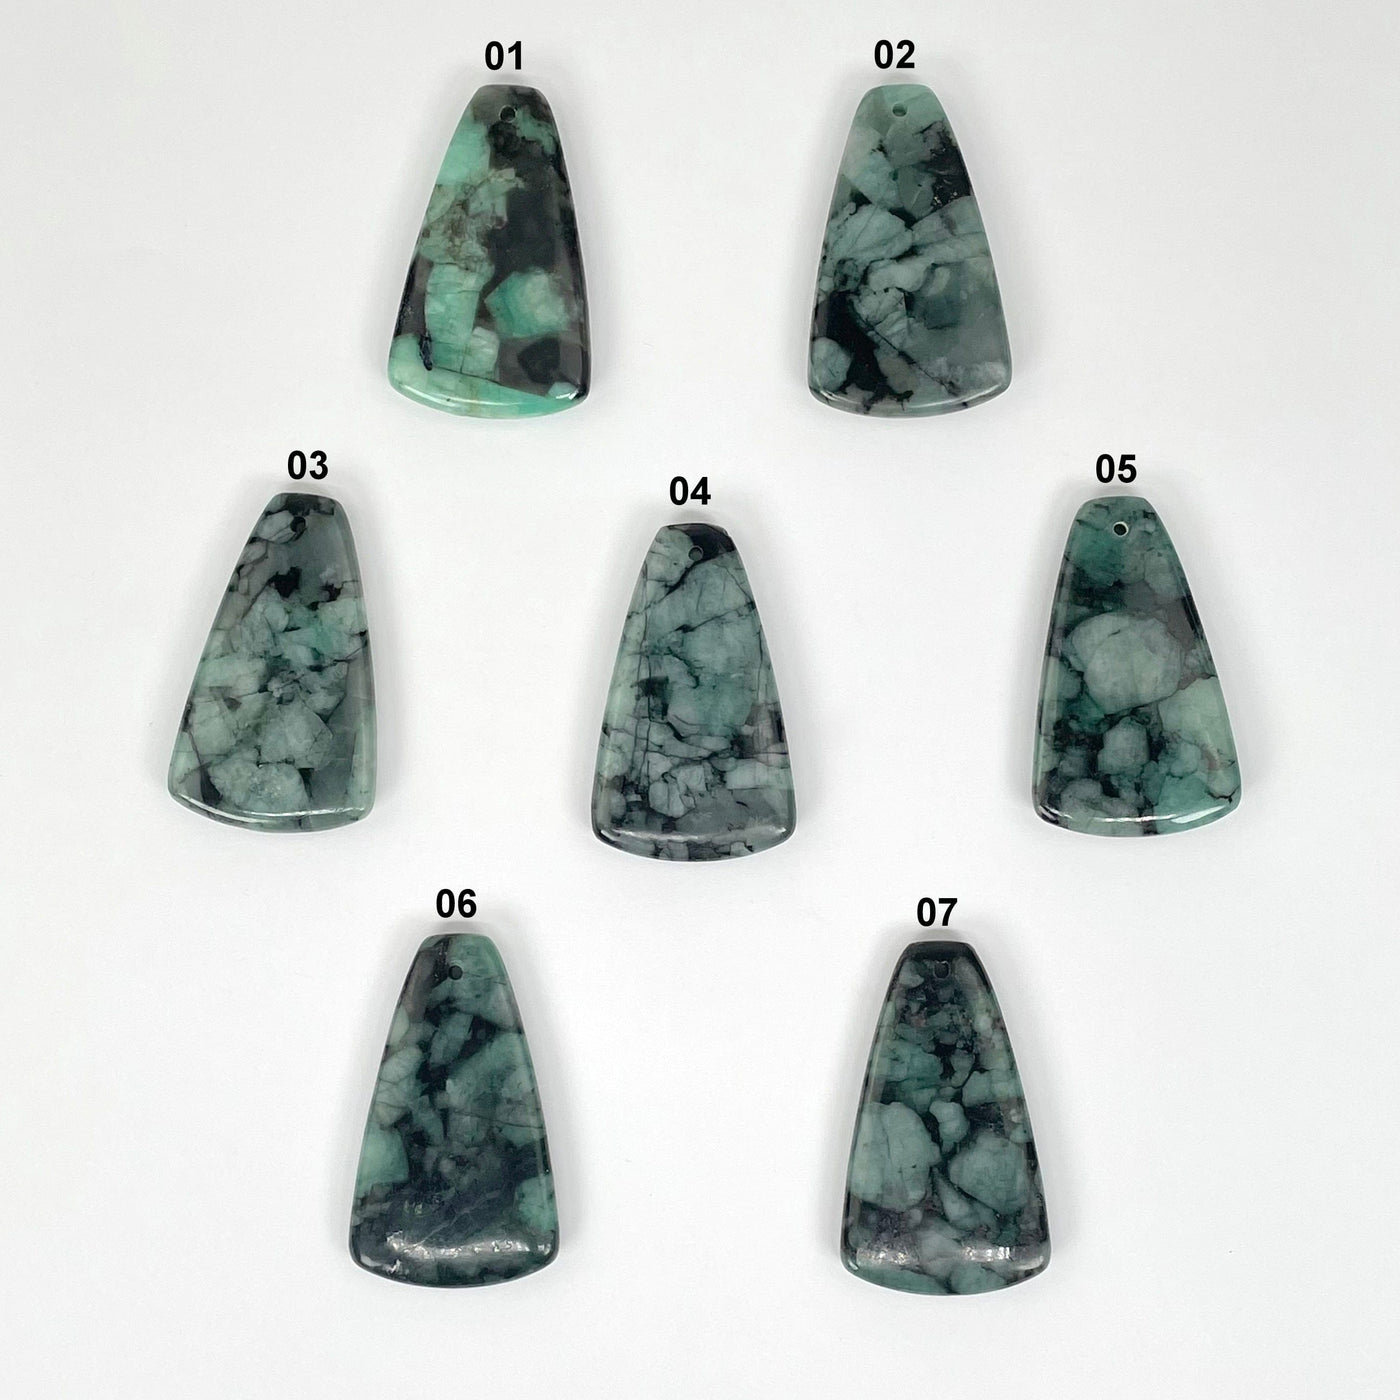 all emerald polished pendant options on display